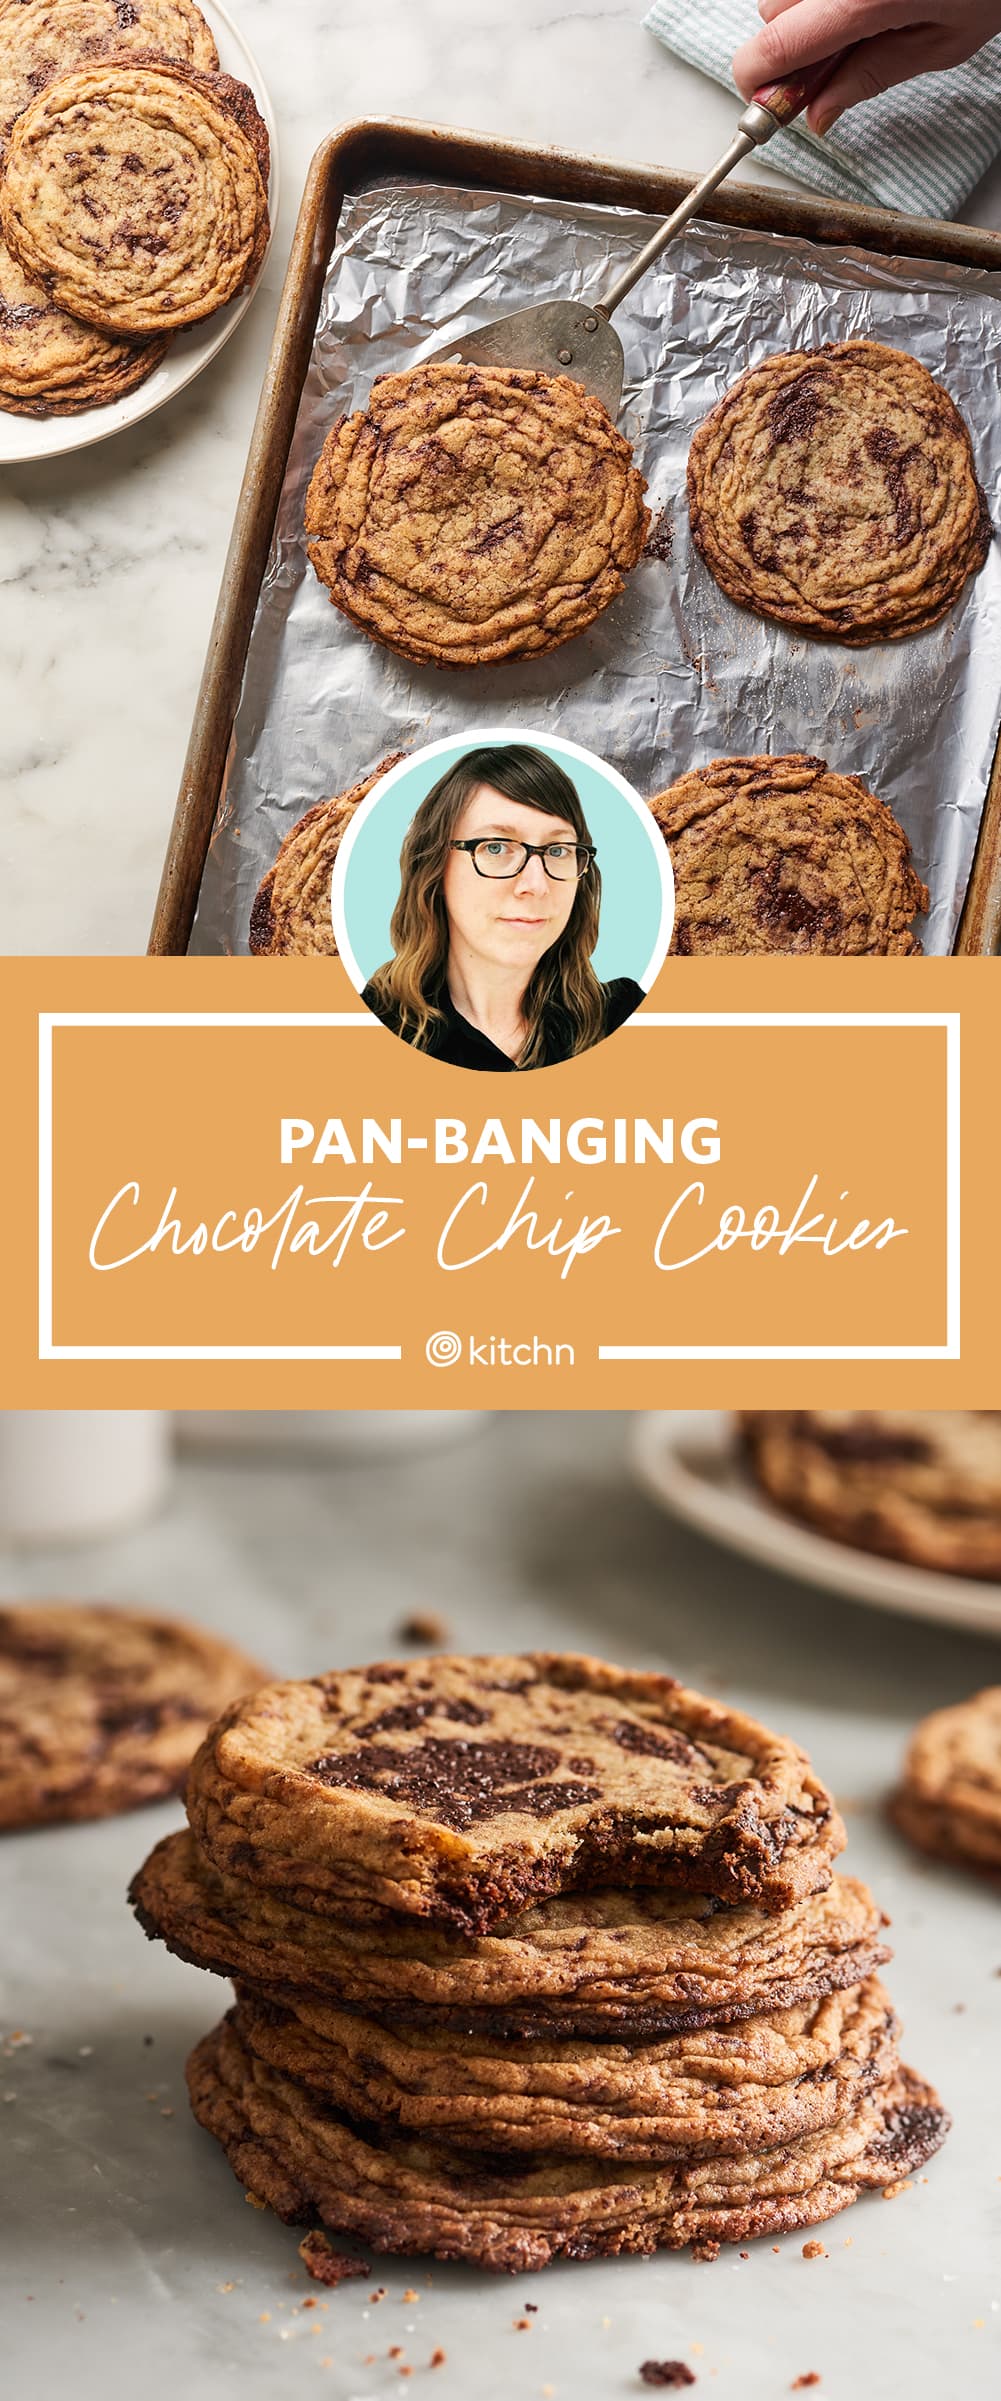 https://cdn.apartmenttherapy.info/image/upload/v1556286473/k/Photo/Series/2019-05-Recipe-Showdown-Cookies/Sarah-Kieffer-Recipes-Chocolate-Chip-Cookies-pinterest.jpg